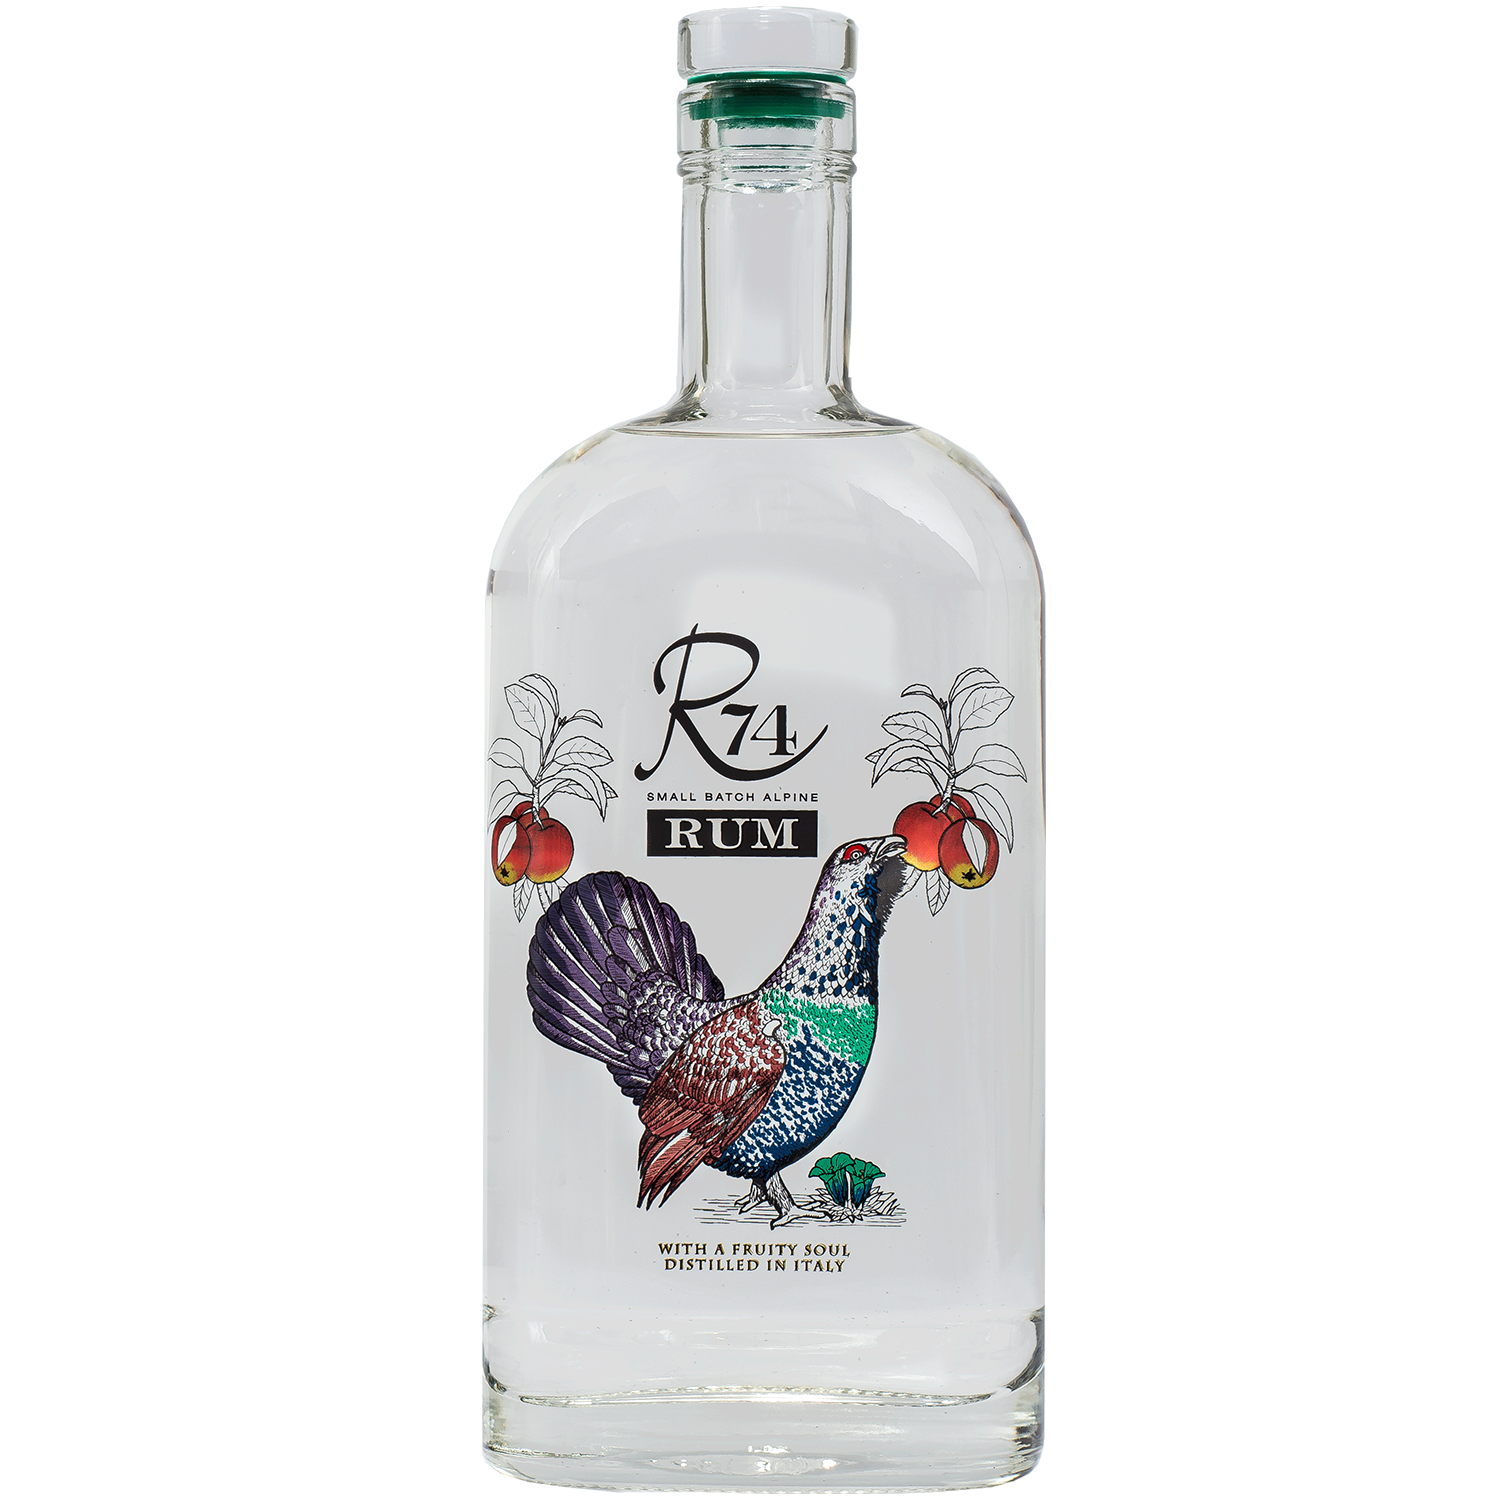 R47 Rum white by Roner in 700ml bottle